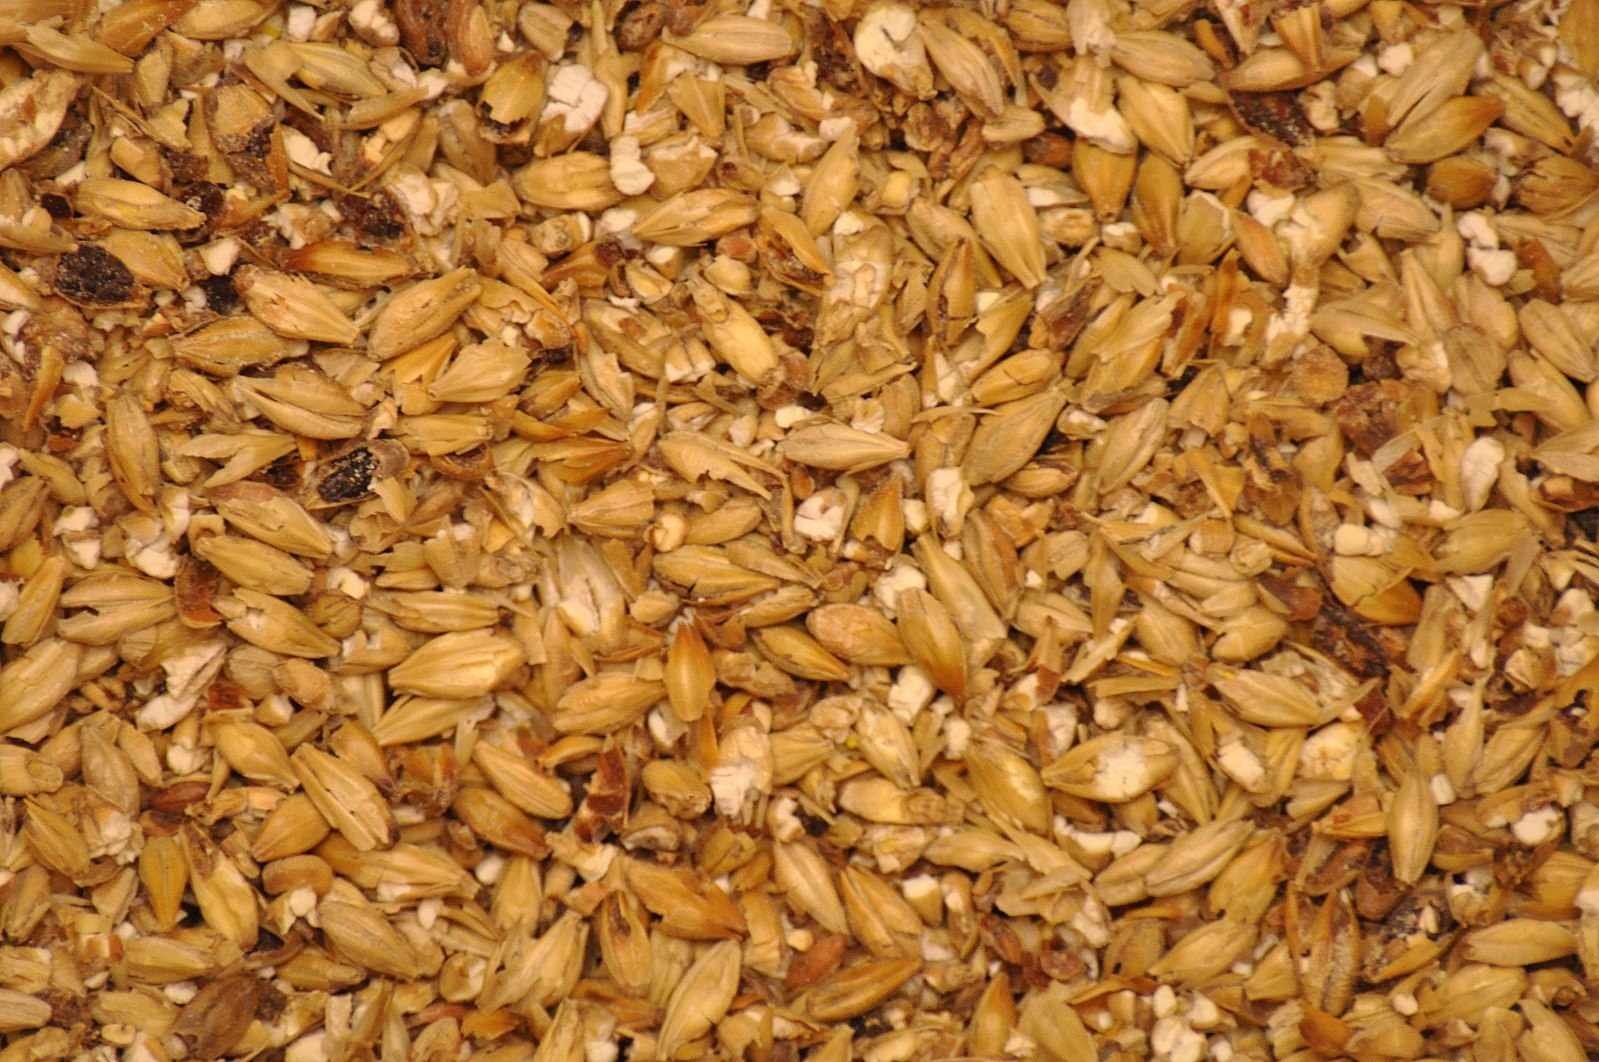 milled malted barley